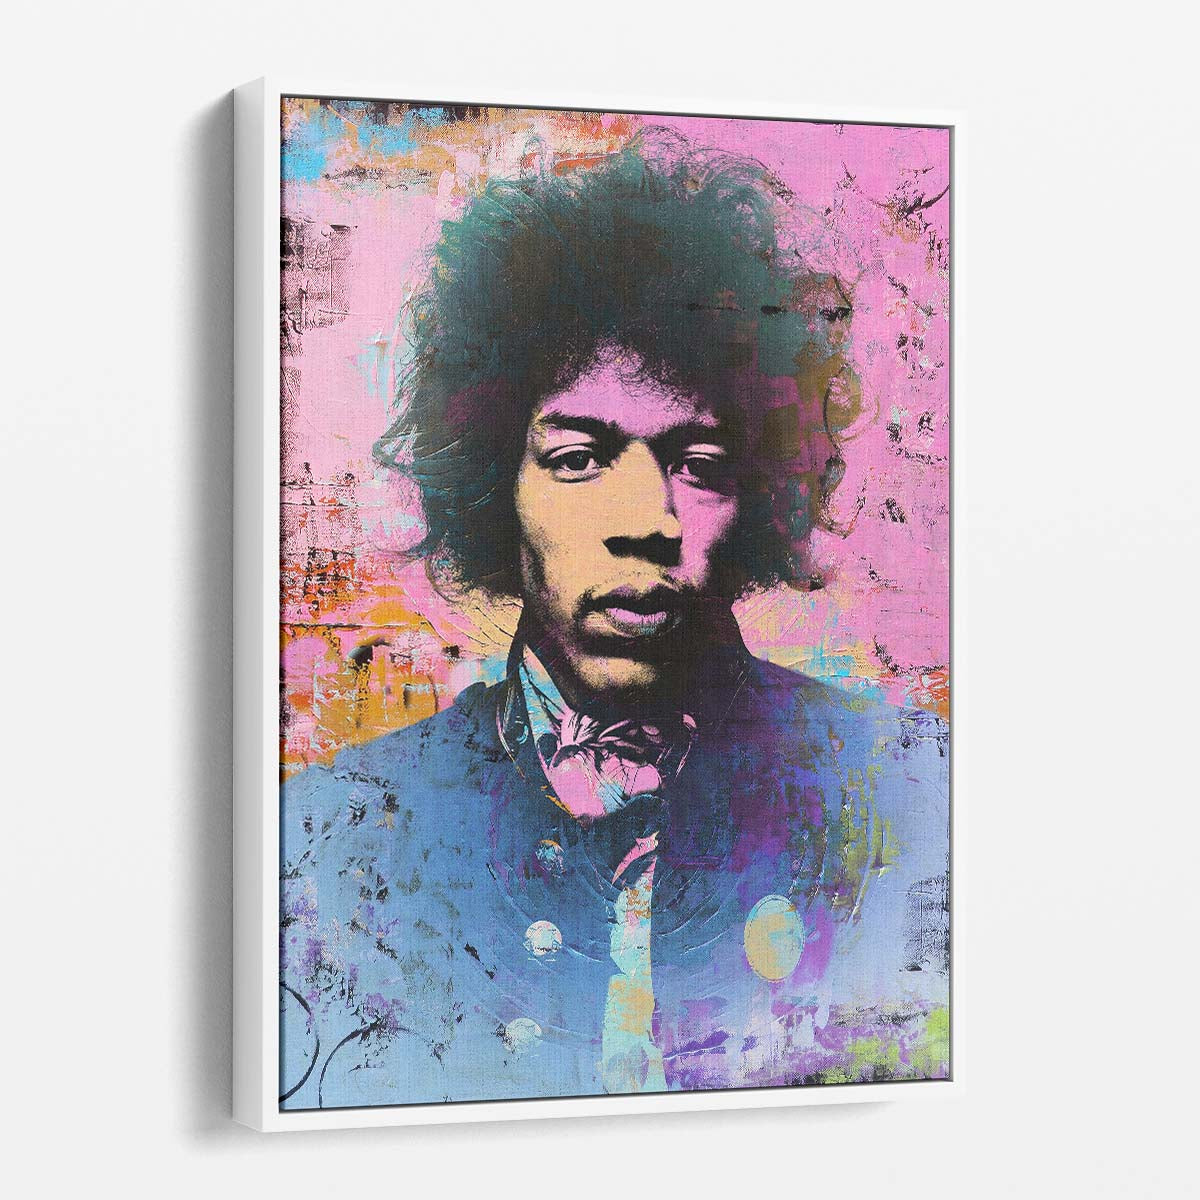 Jimi Hendrix Circles Graffiti Wall Art by Luxuriance Designs. Made in USA.